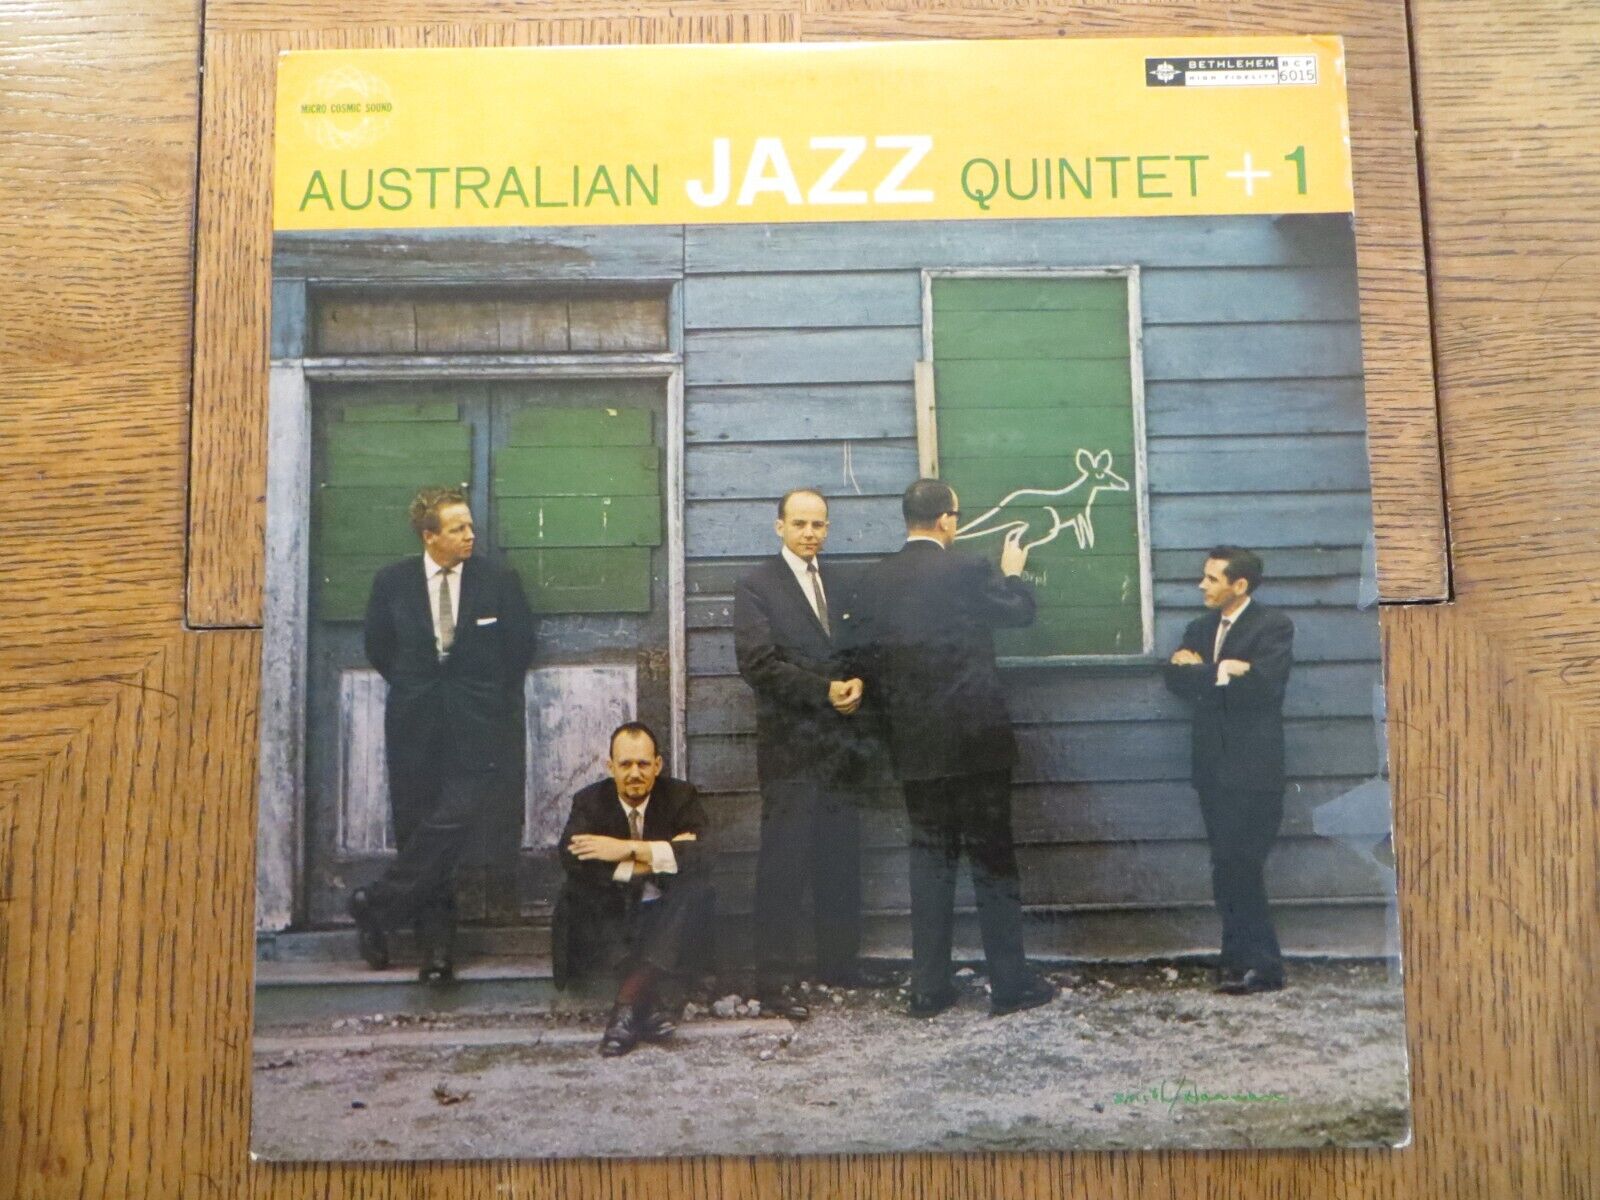 Australian Jazz Quintet & Osie Johnson – Australian Jazz Quintet + 1 - 1958 - LP